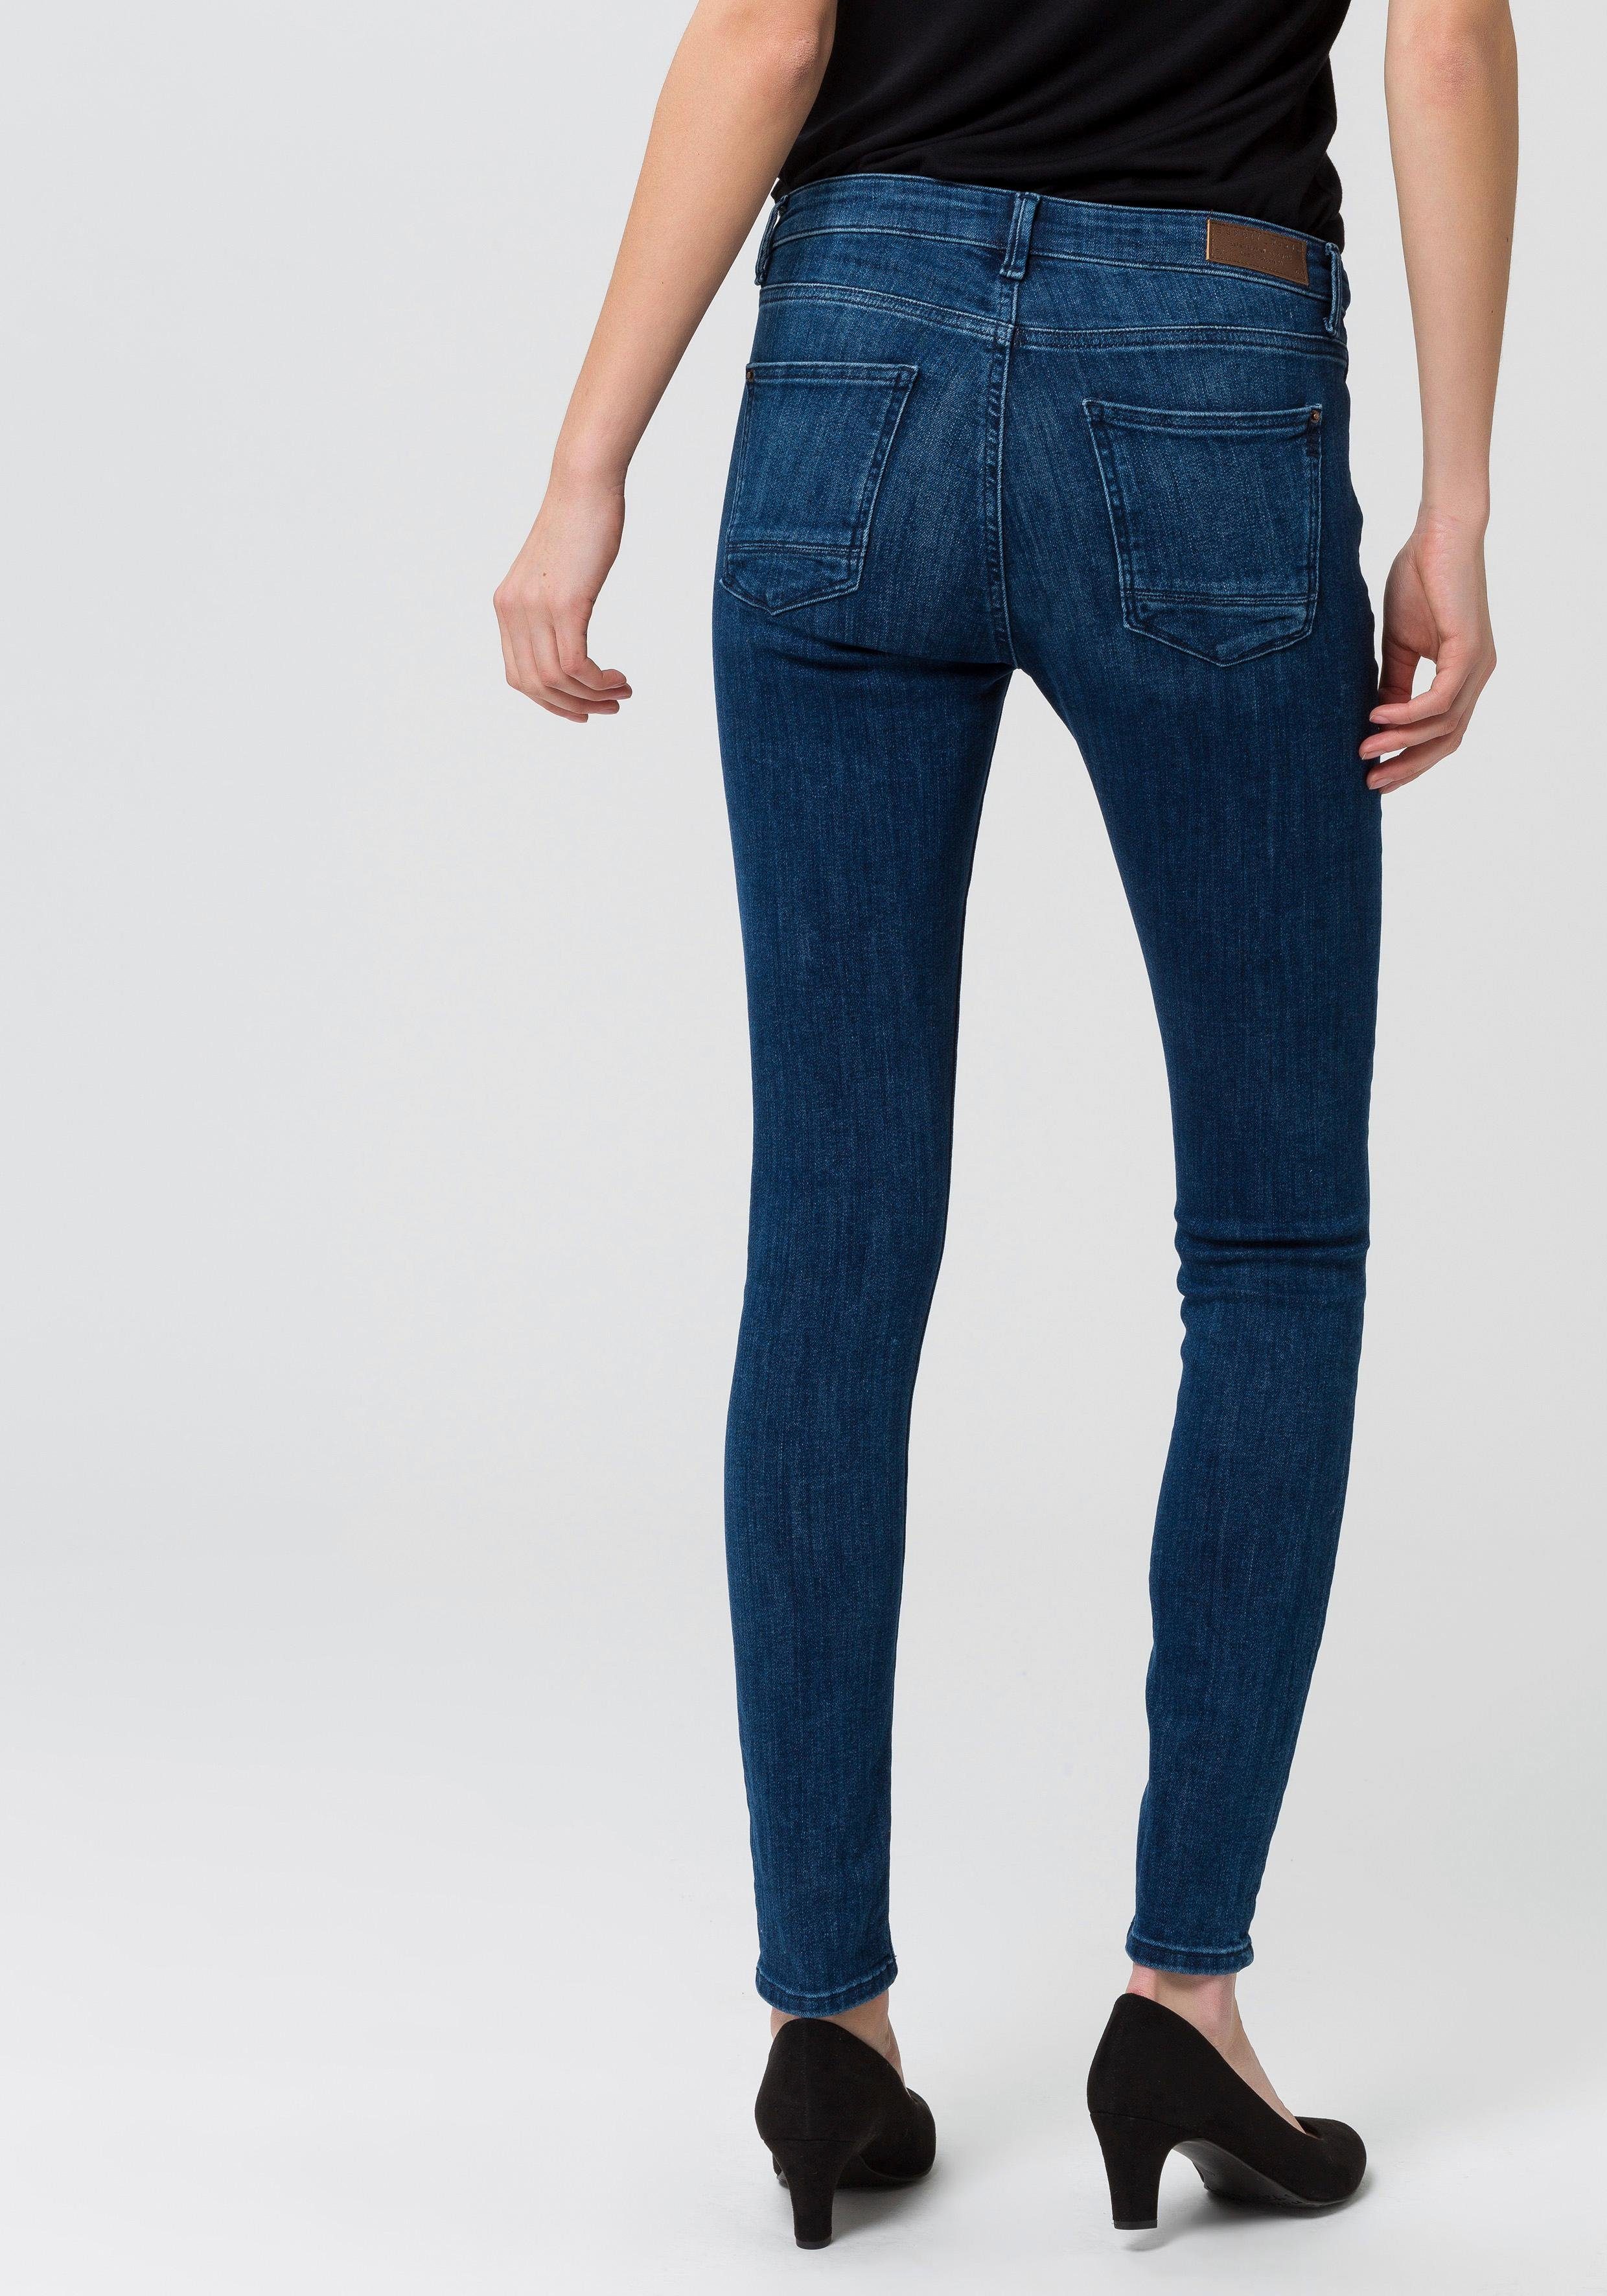 Otto - ESPRIT NU 15% KORTING: ESPRIT skinny fit jeans